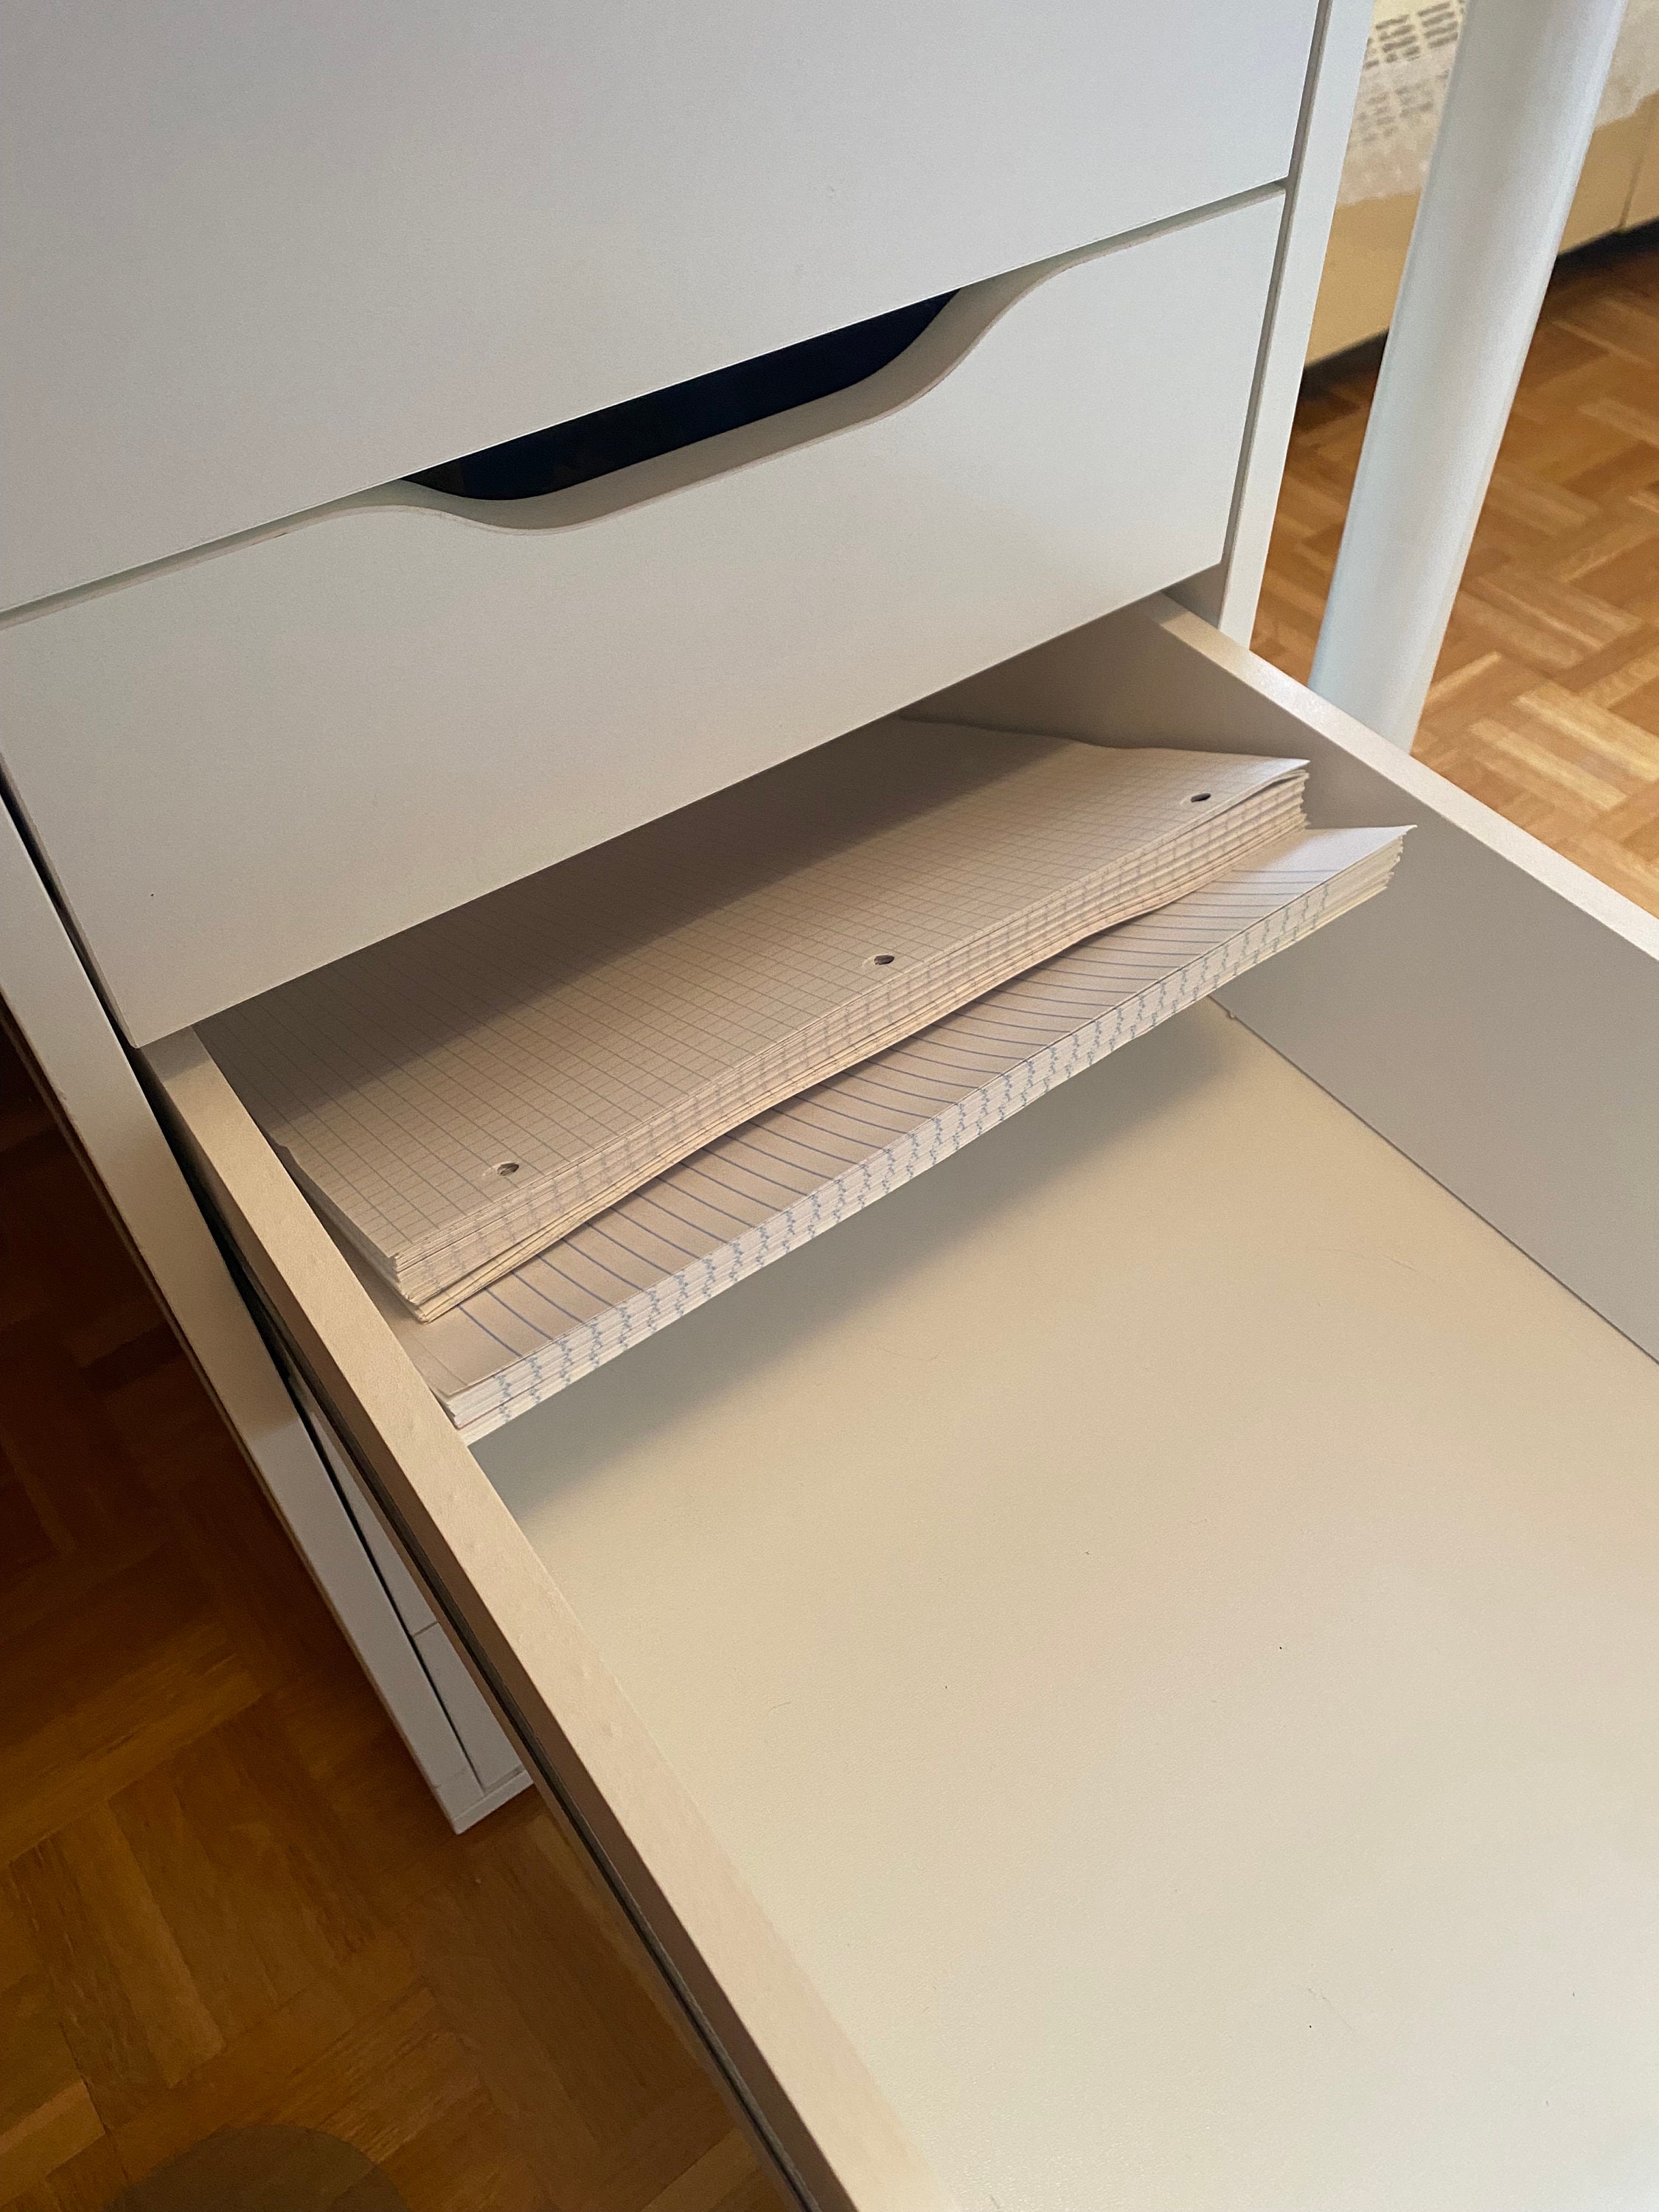 Drawer Organizer 8 Compartment Fits IKEA Alex Tall Drawers 8 Compartgm –